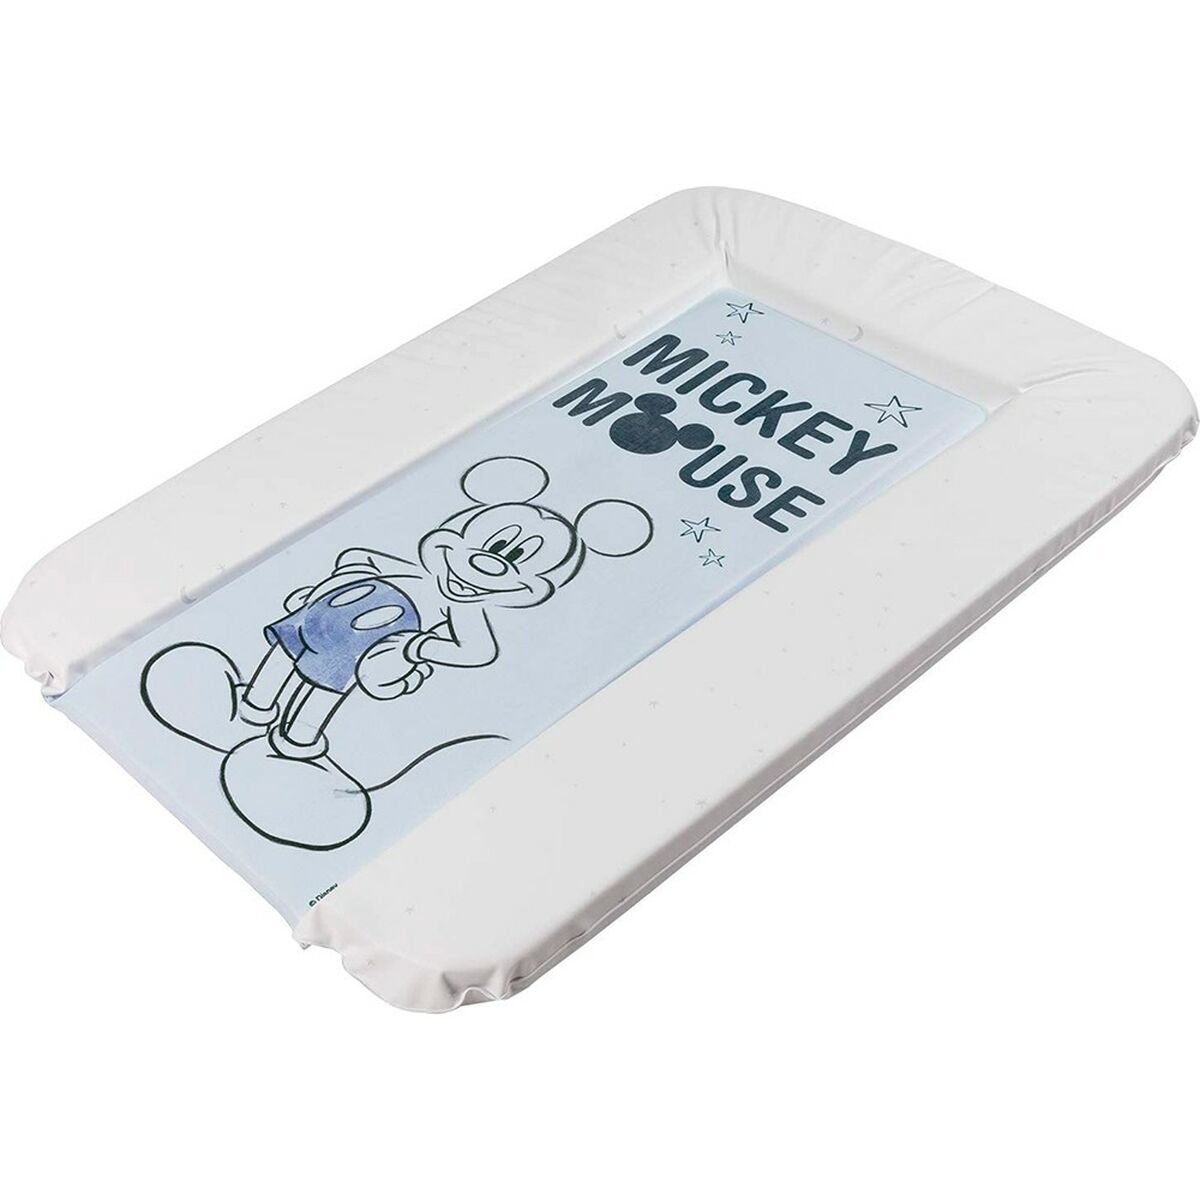 Wickelkommode Mickey Mouse CZ10341 Unterwegs Blau 73 x 48,5 x 3 cm